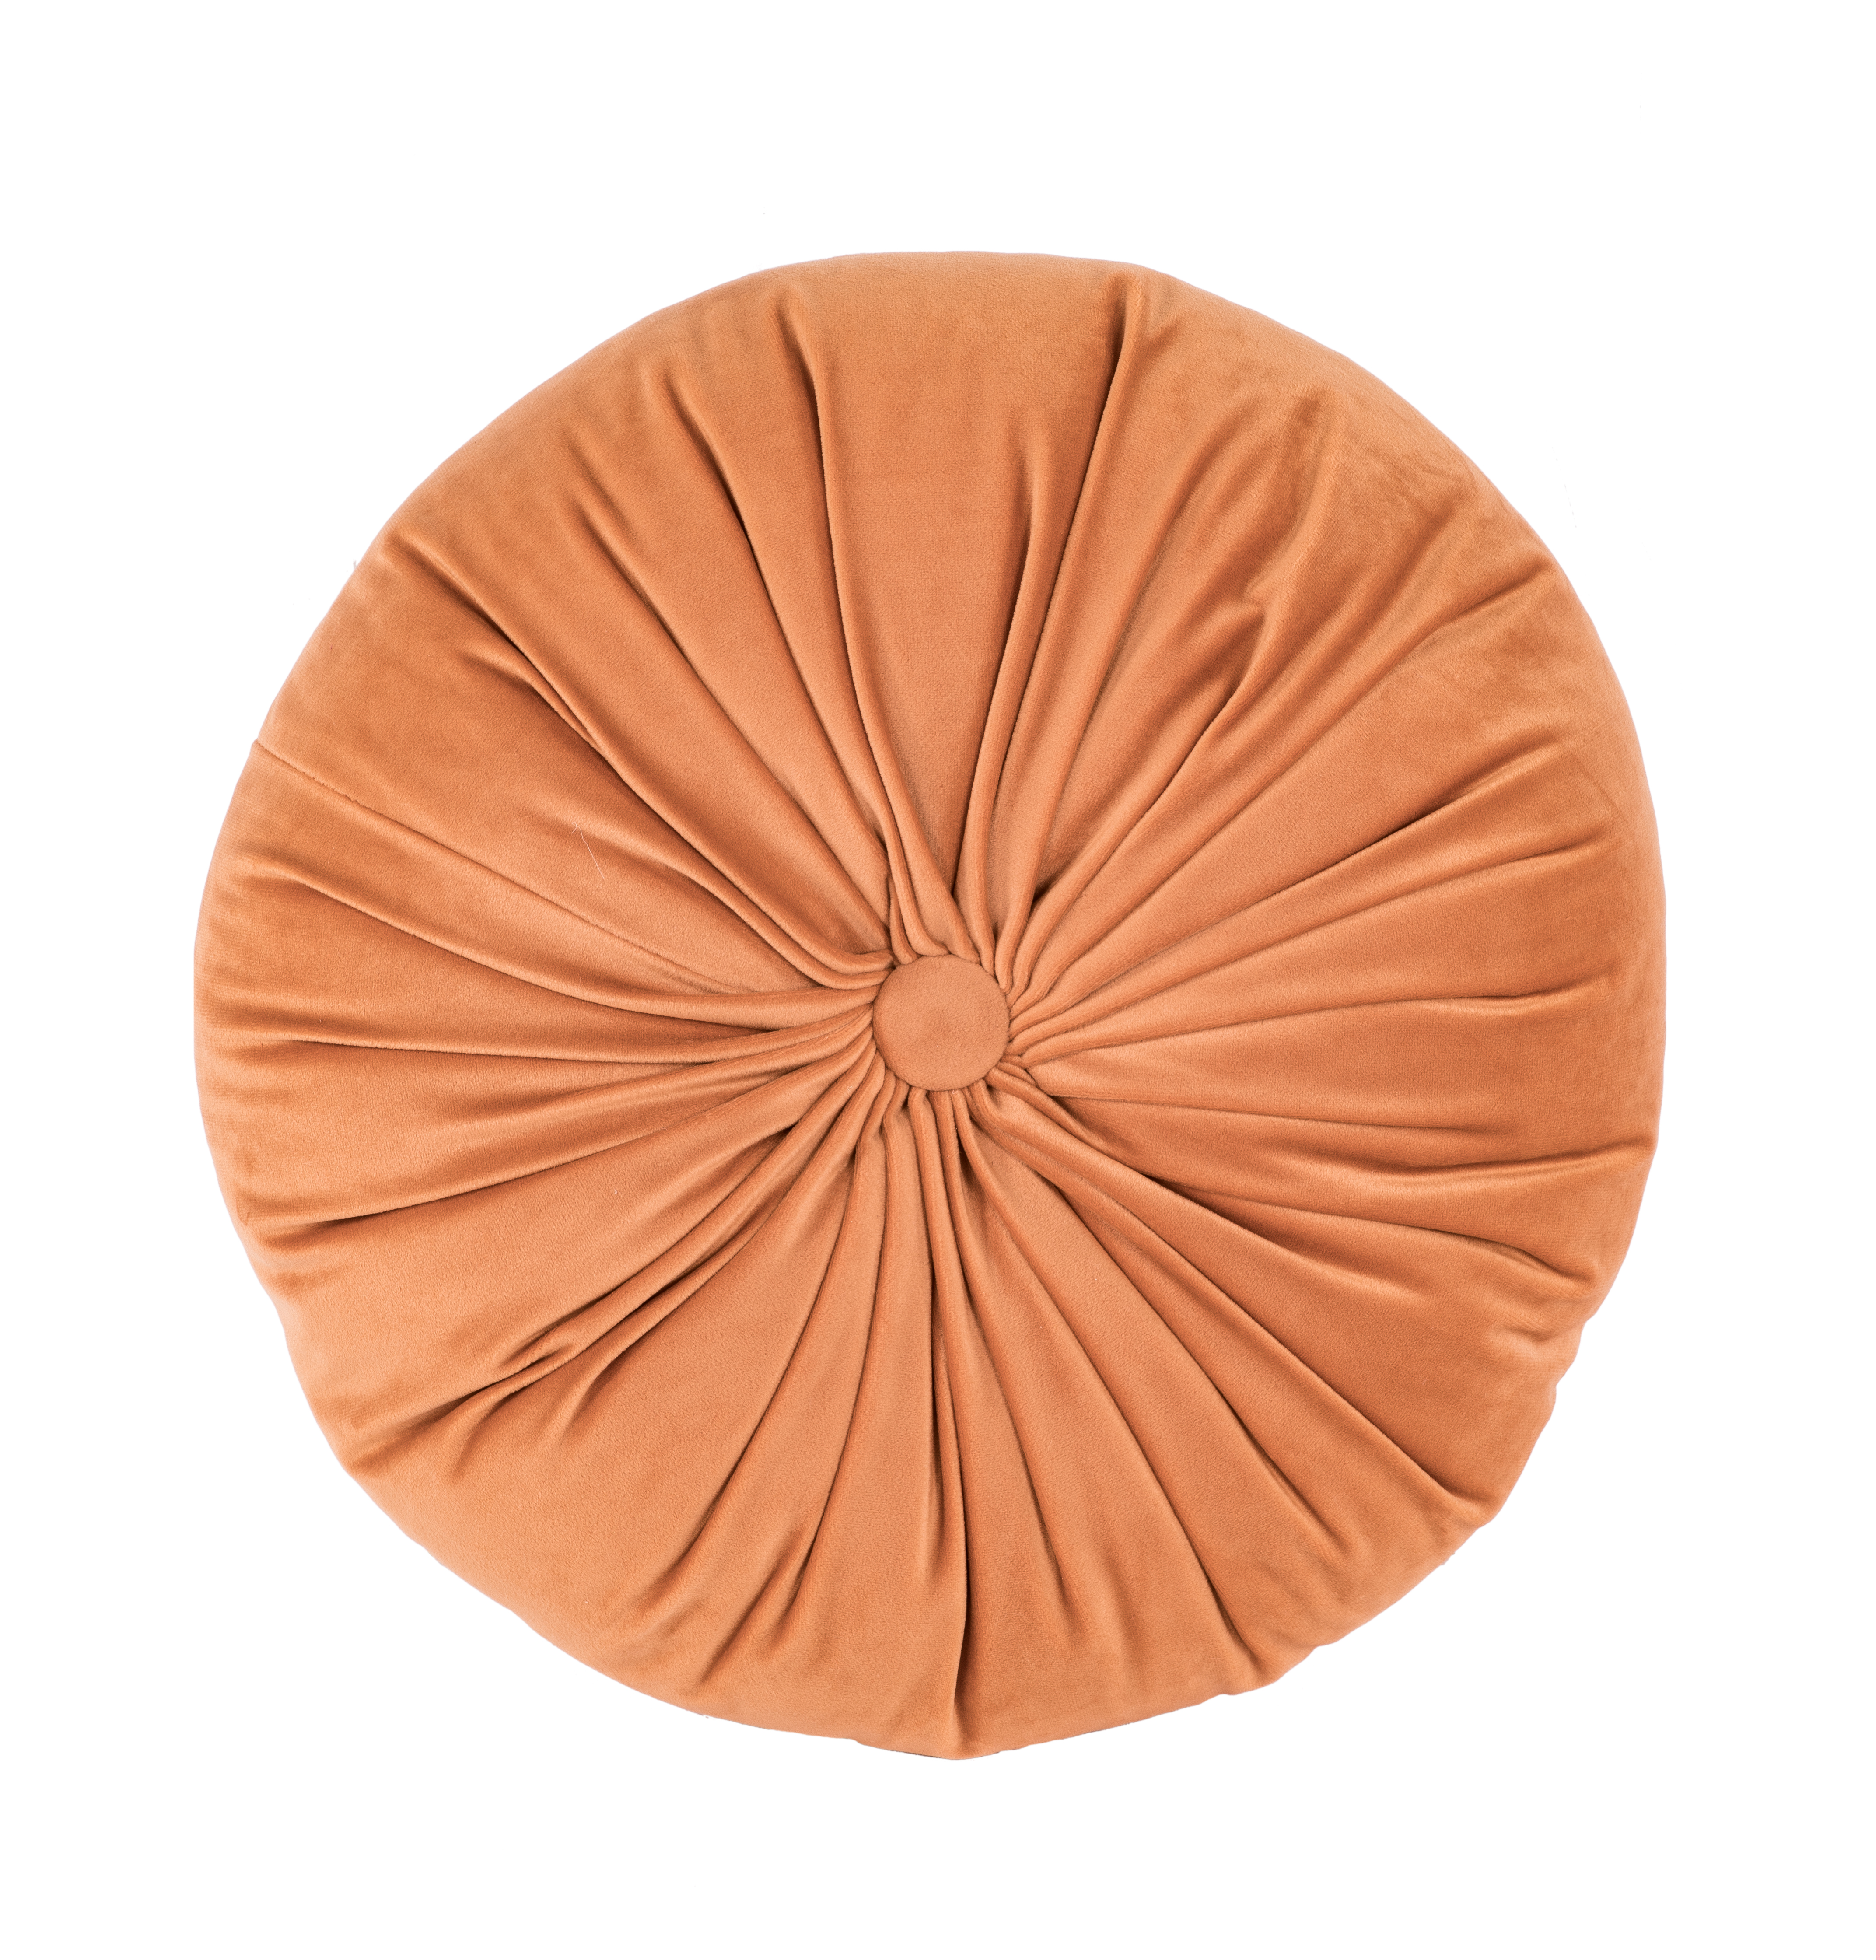 Cushion (filled) Microvelvet peach ROUND (1 button)